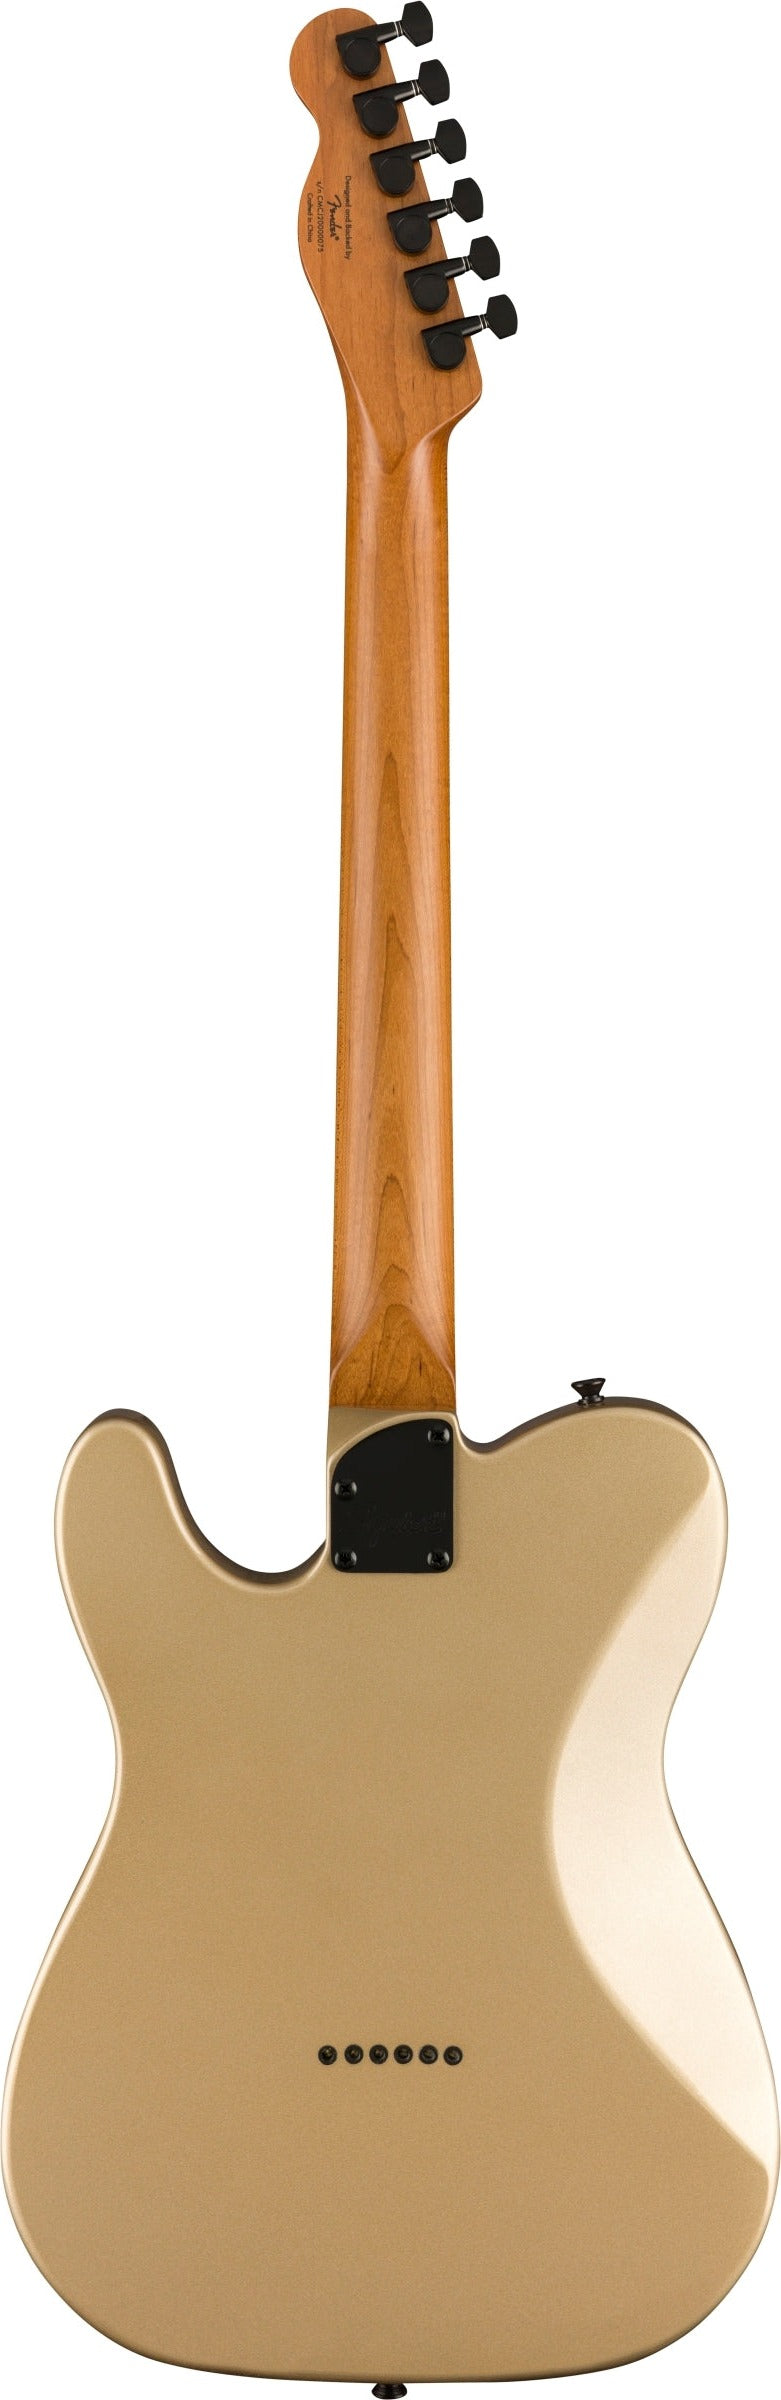 Squier Contemporary Telecaster RH Electric Guitar - Shoreline Gold